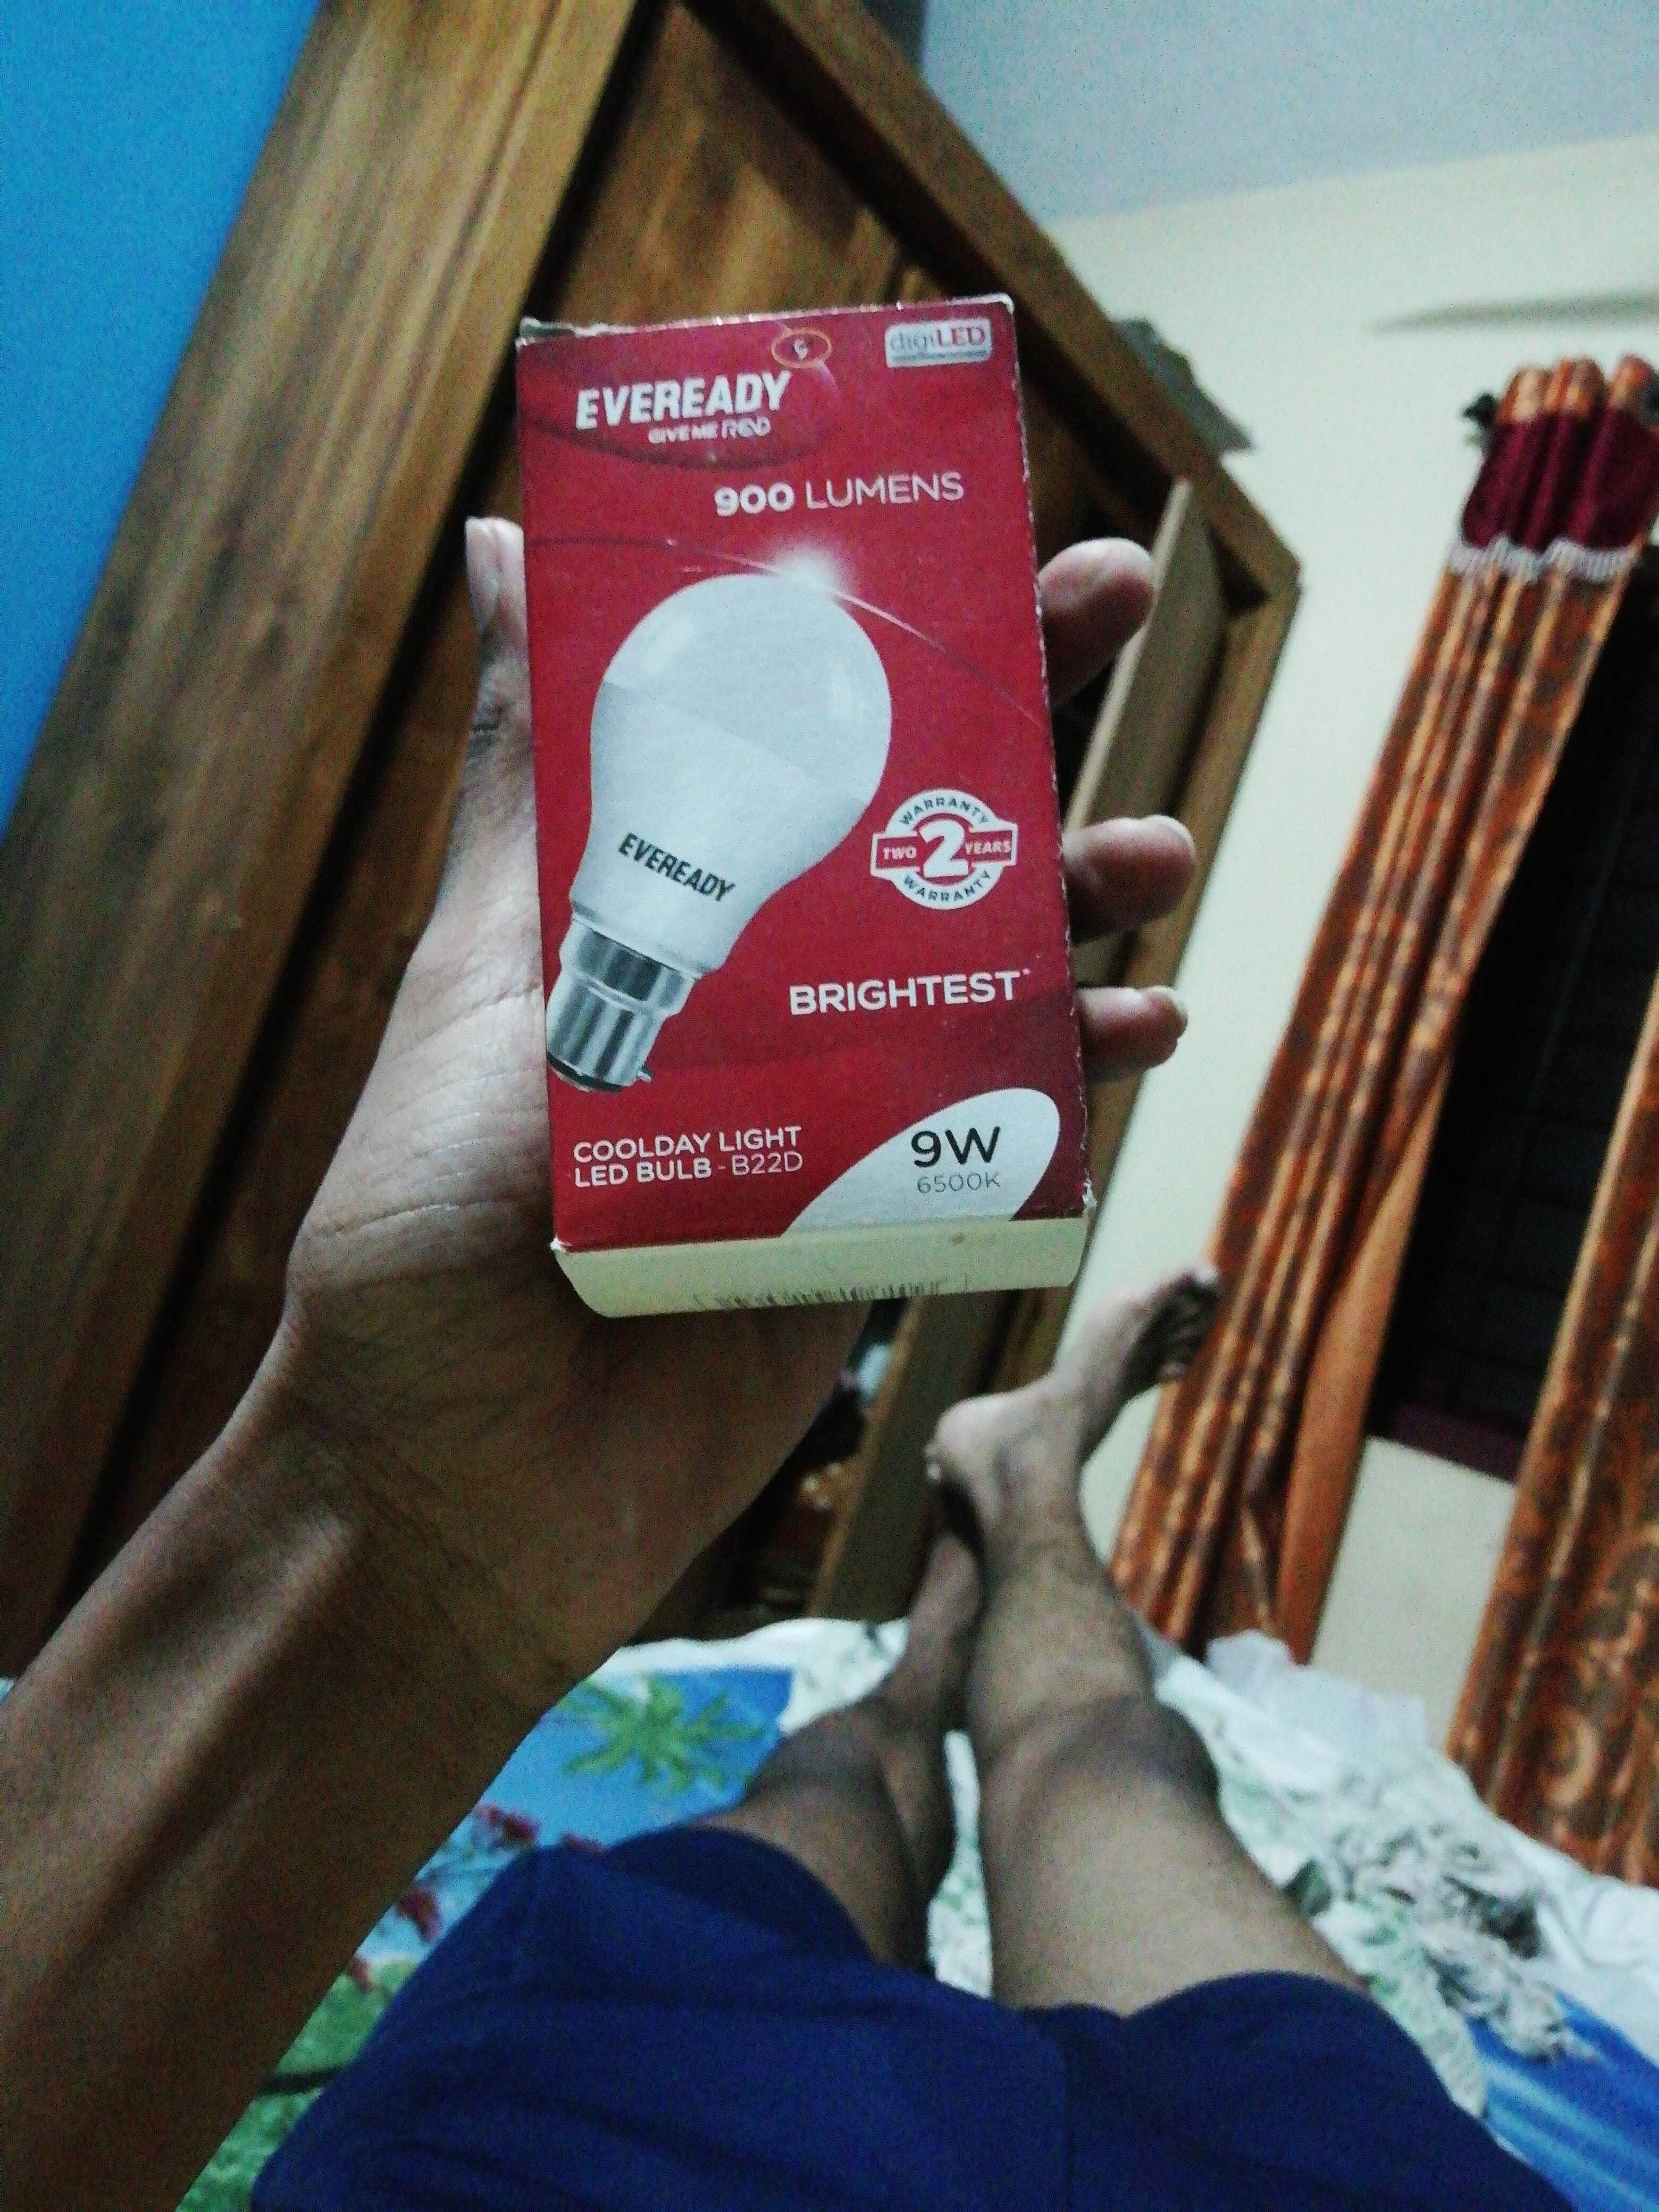 Eveready 9W Led Bulb - Product - en